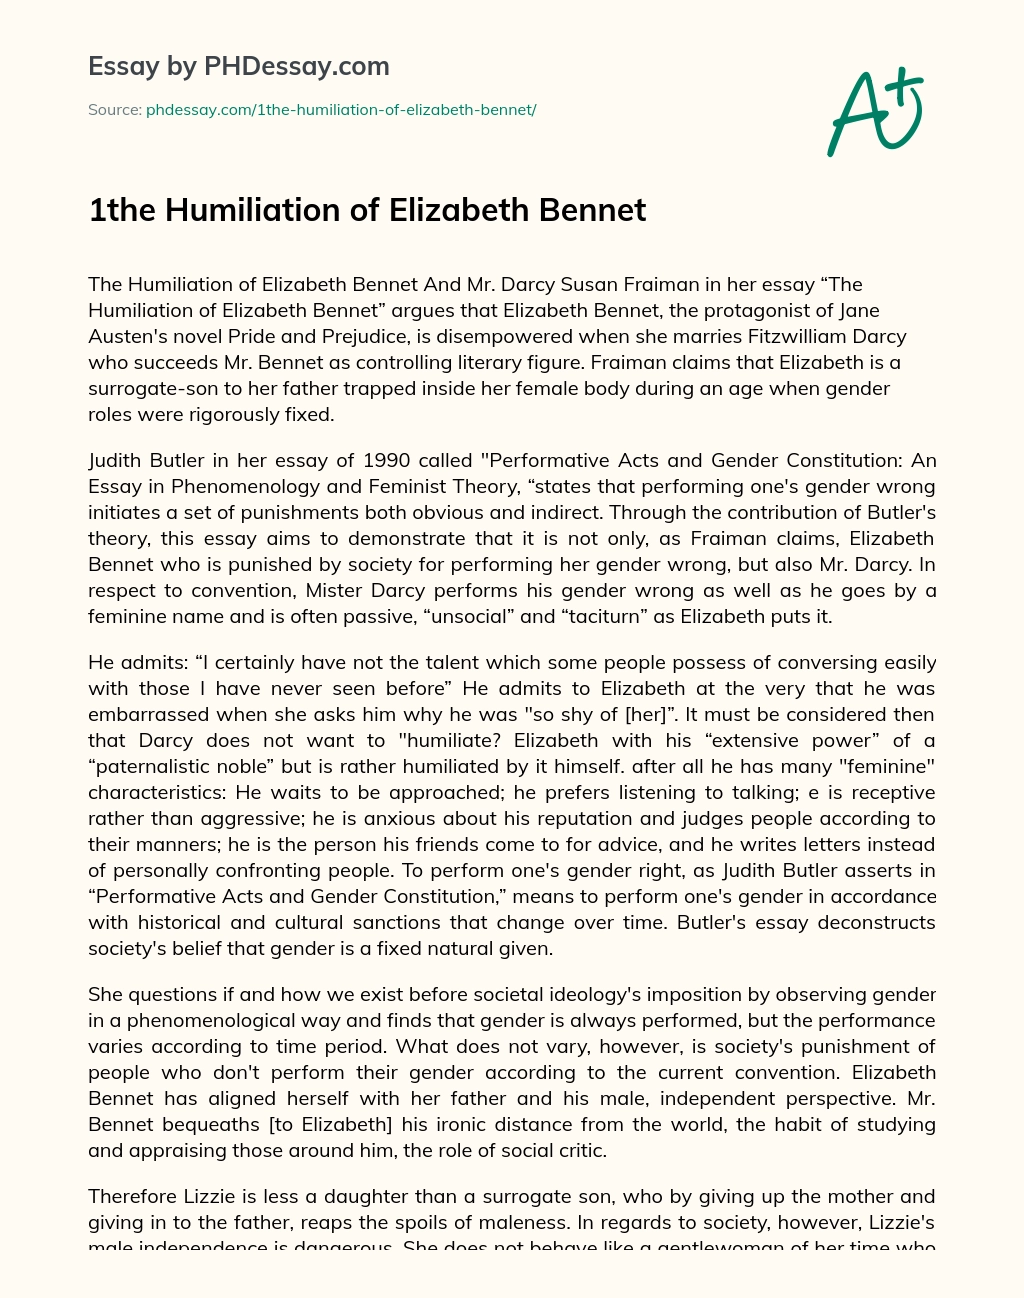 1the Humiliation of Elizabeth Bennet essay